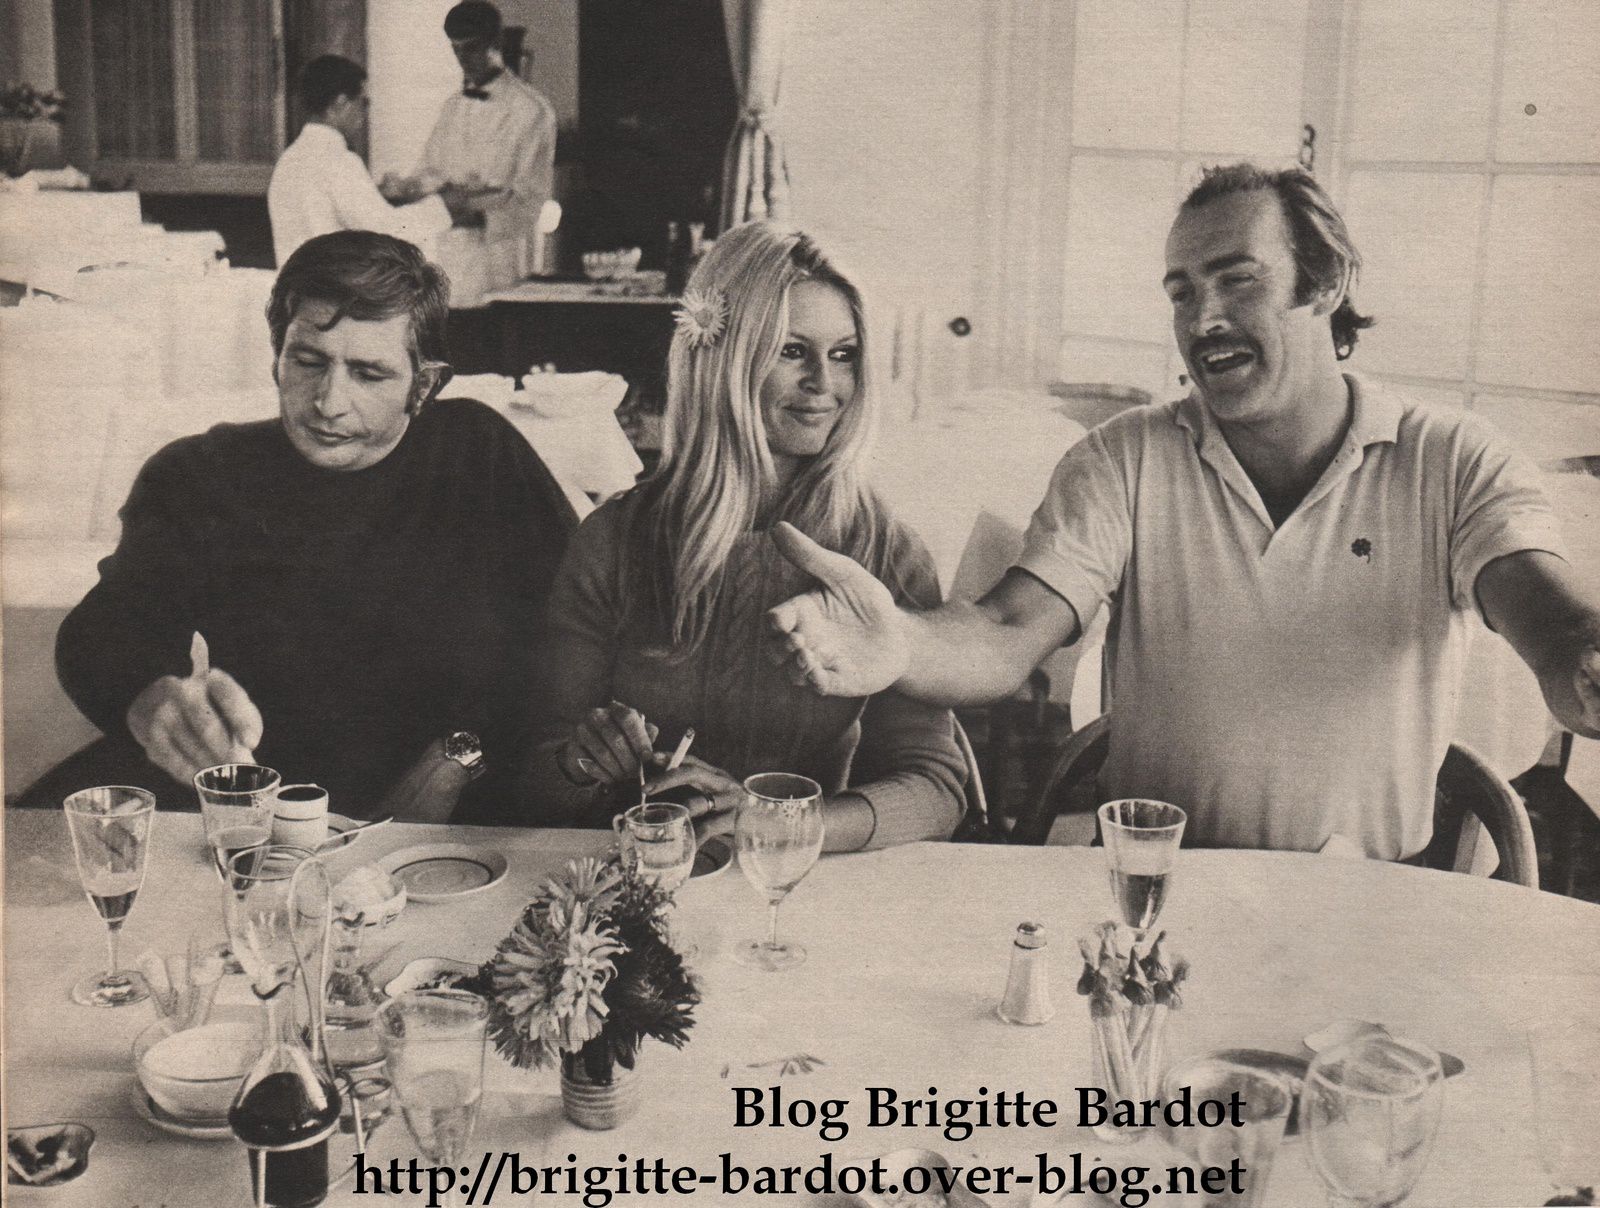 Brigitte Bardot en photos...sublime...